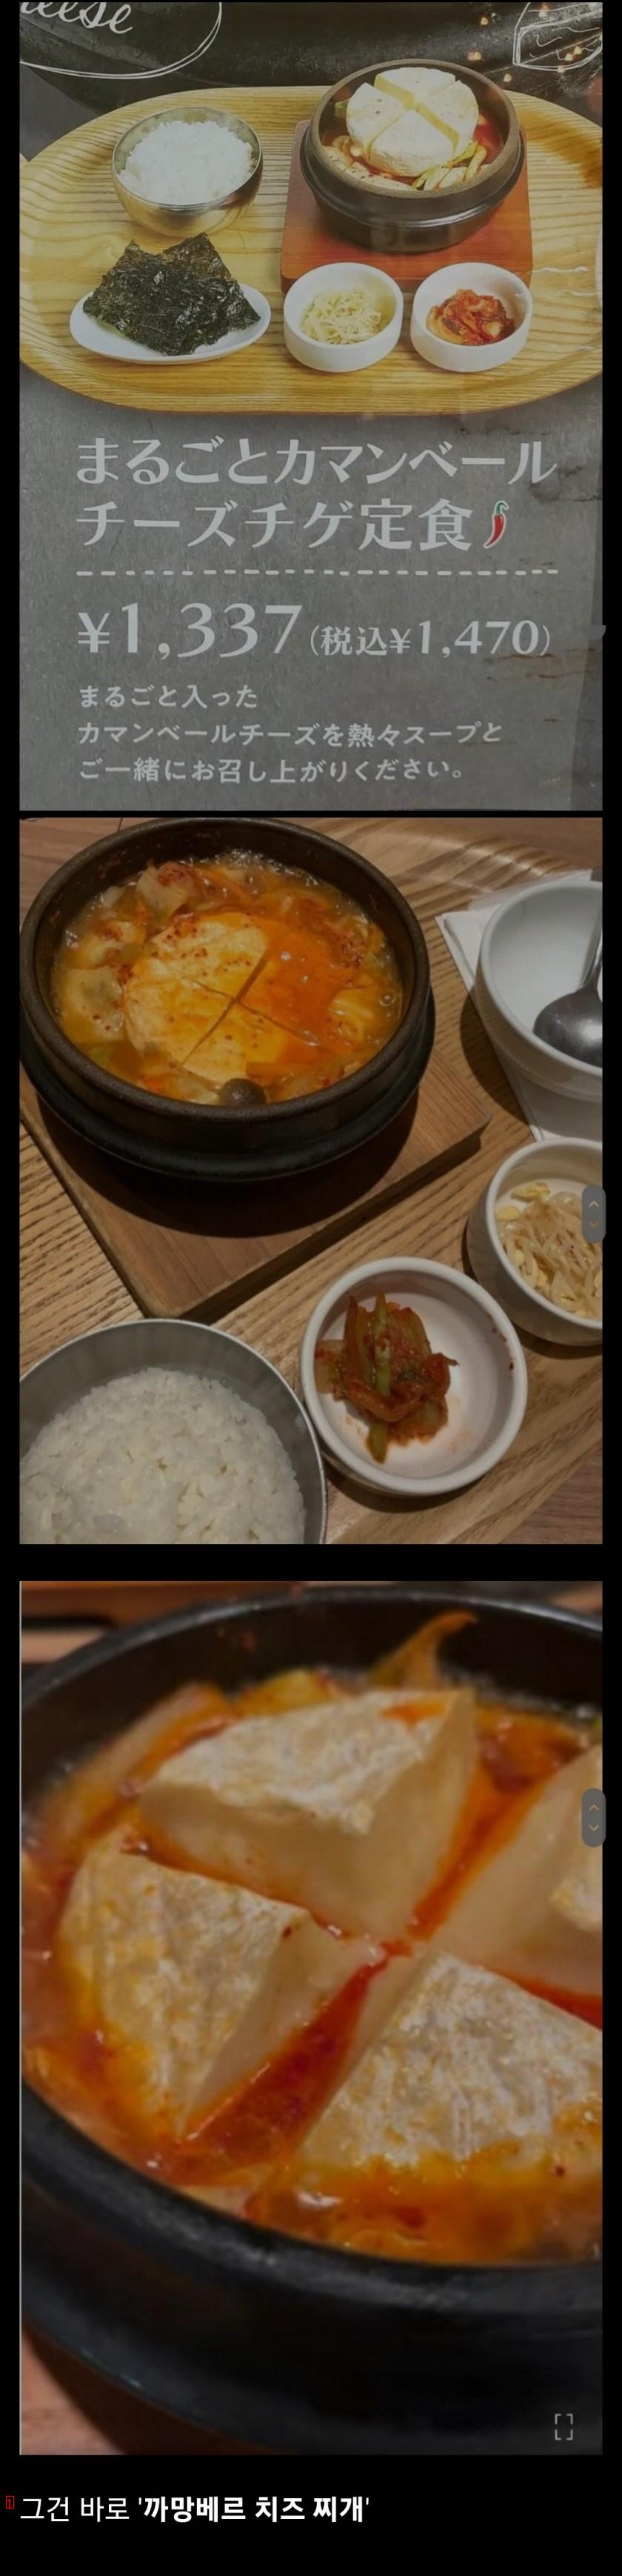 Korean stew that's popular in Japan